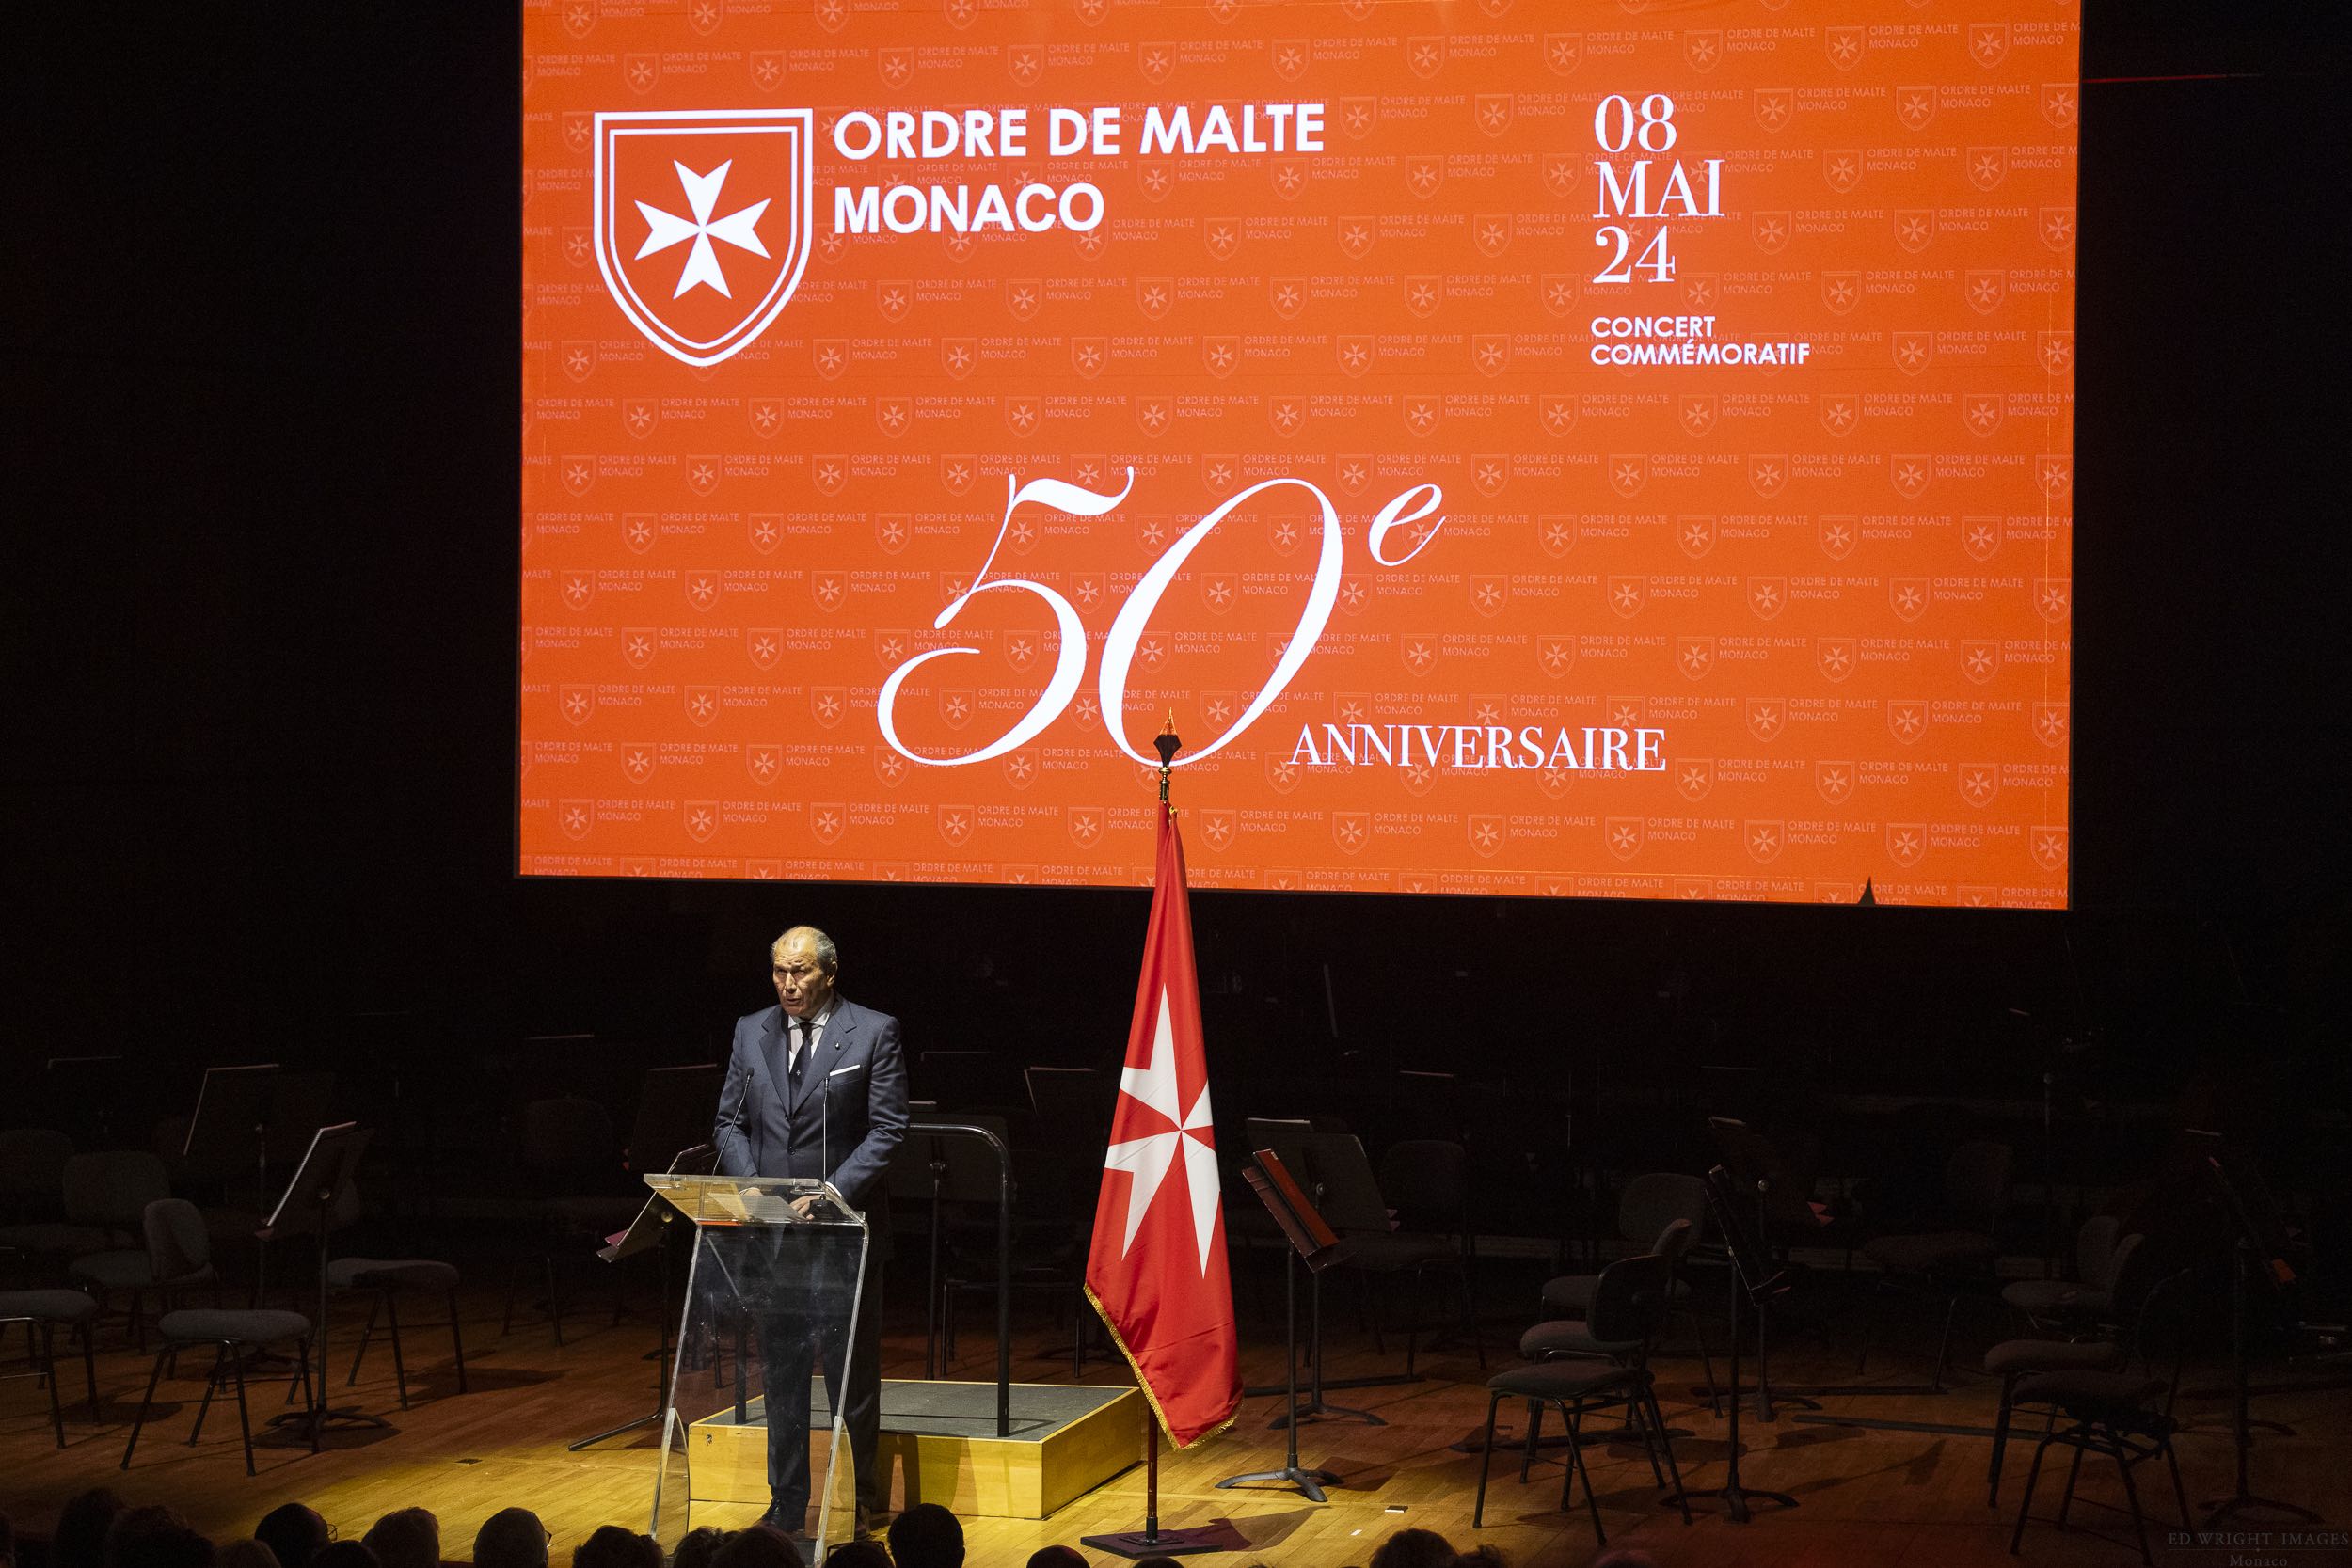 Order of Malta’s Monégasque Association celebrates its 50th anniversary